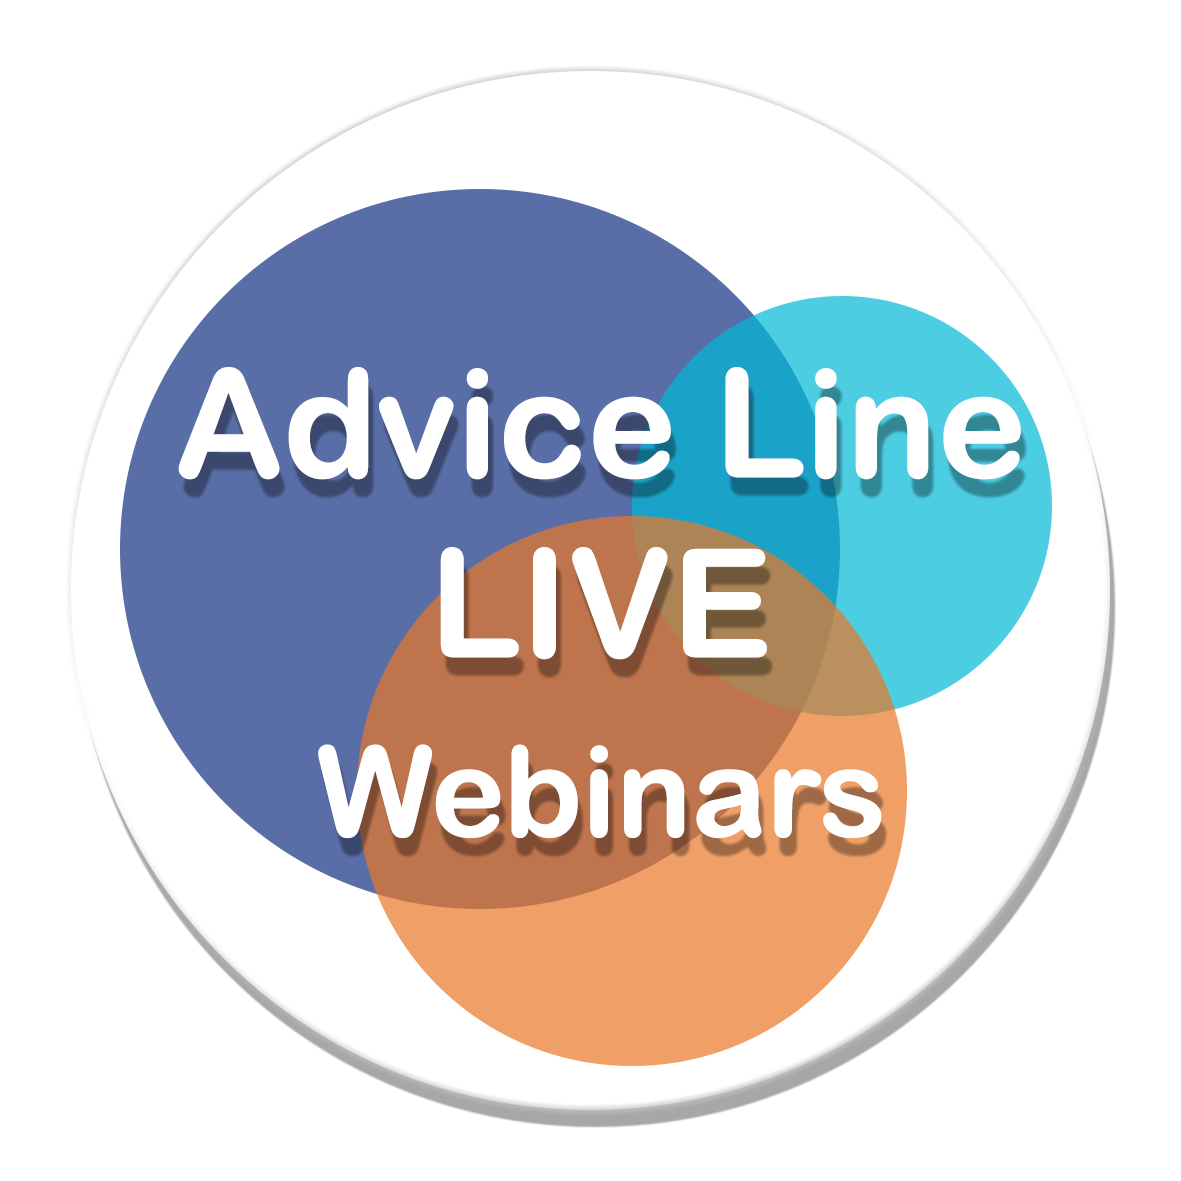 Advice Line LIVE Webinars